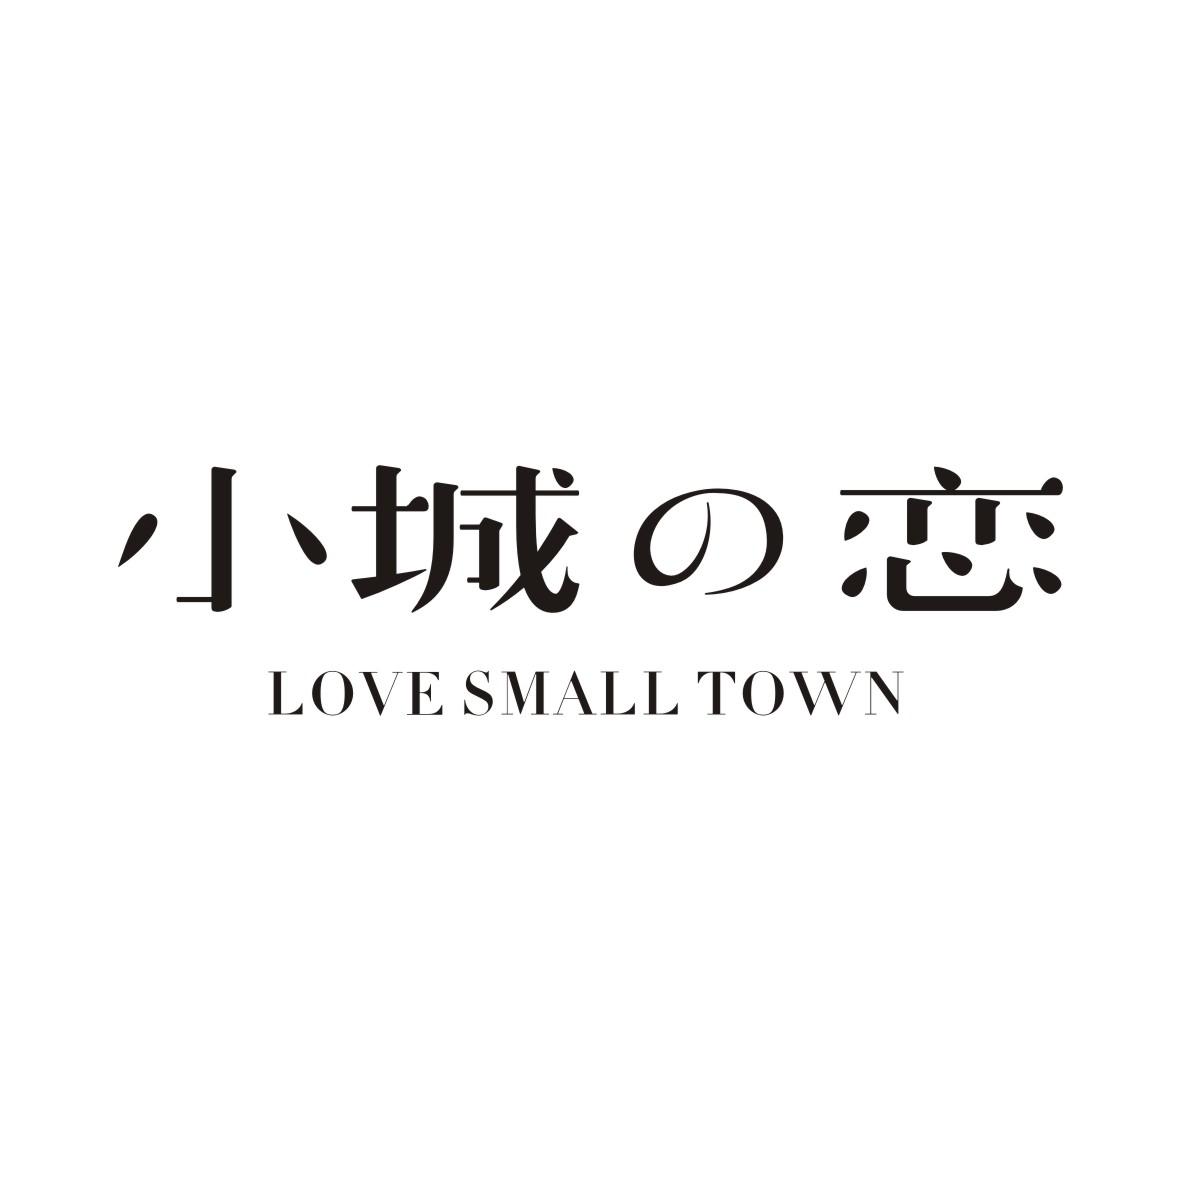 10类-医疗器械小城恋 LOVE SMALL TOWN商标转让